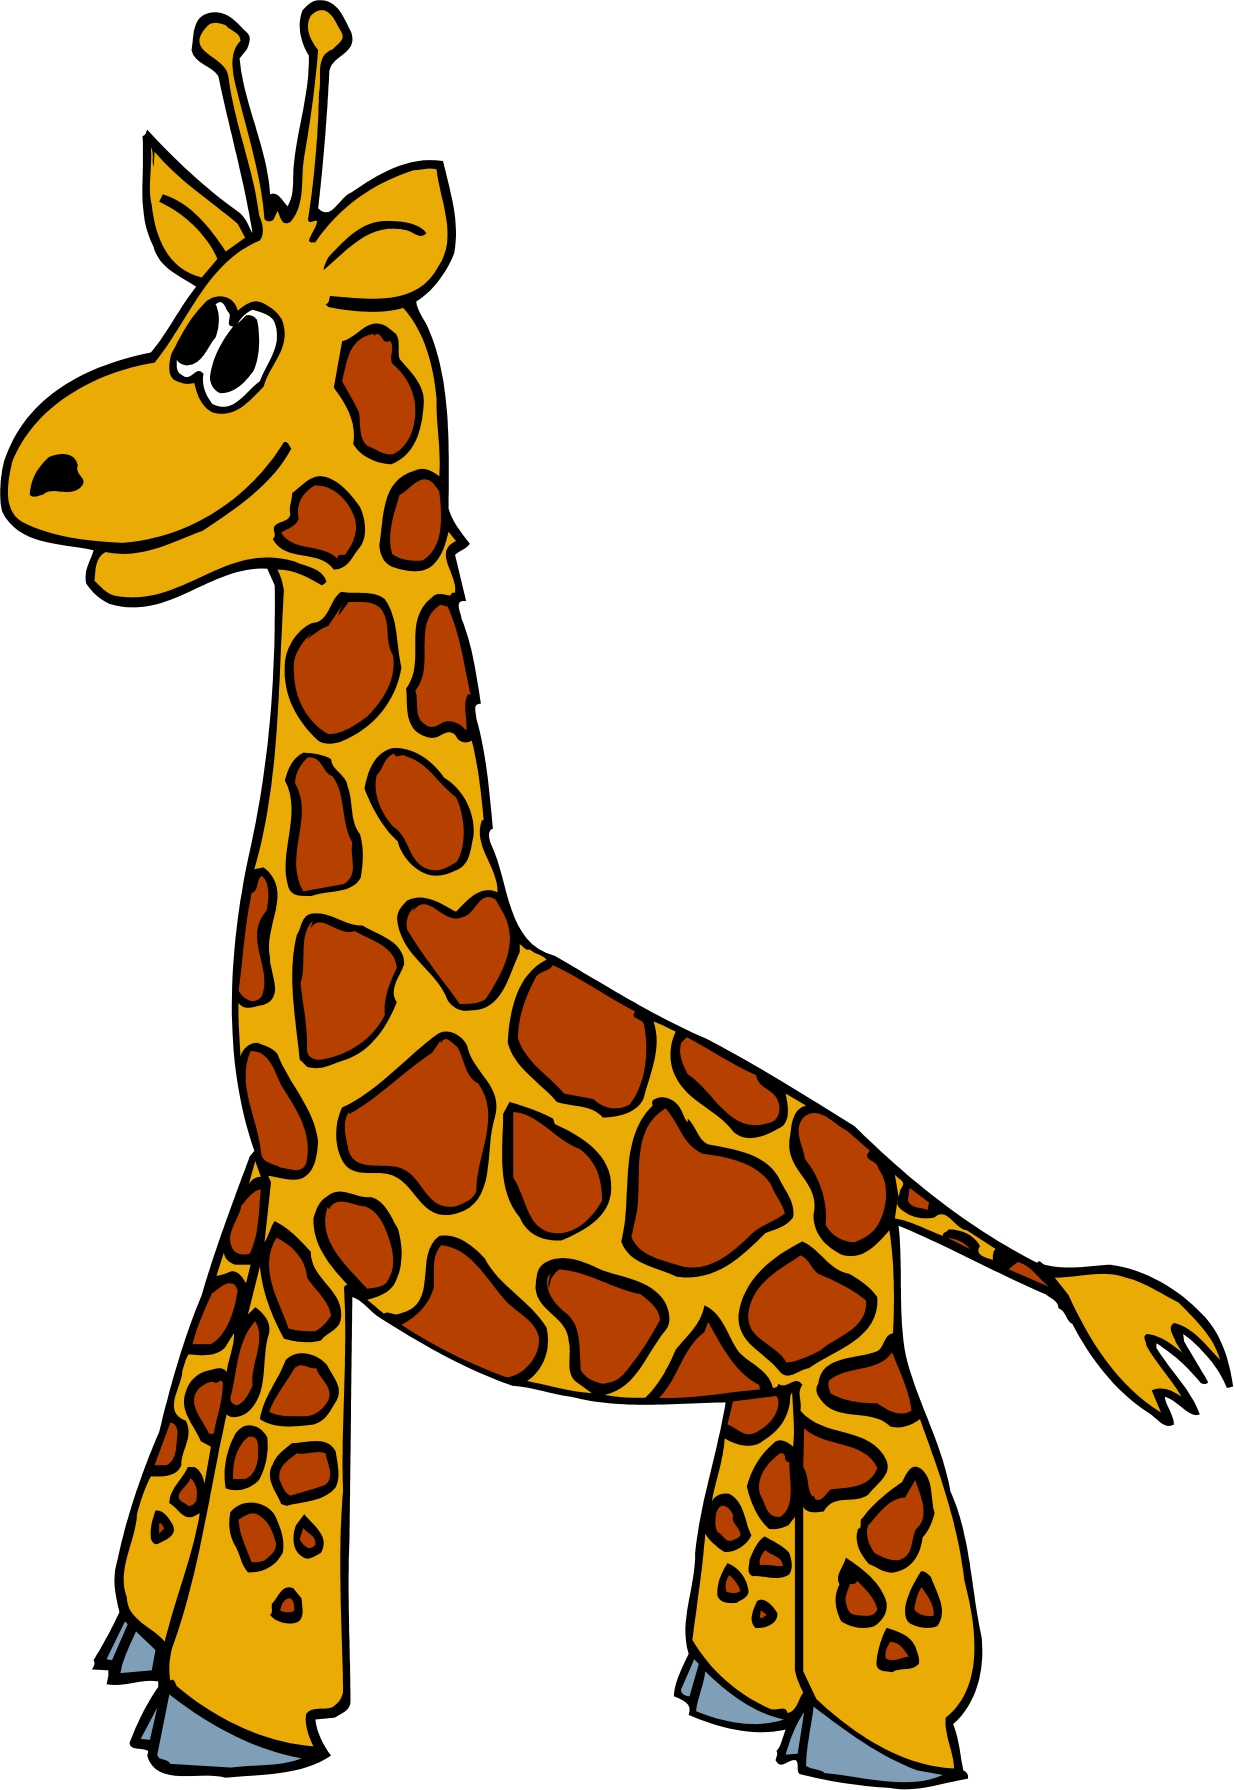 Cartoon baby giraffe images clipart